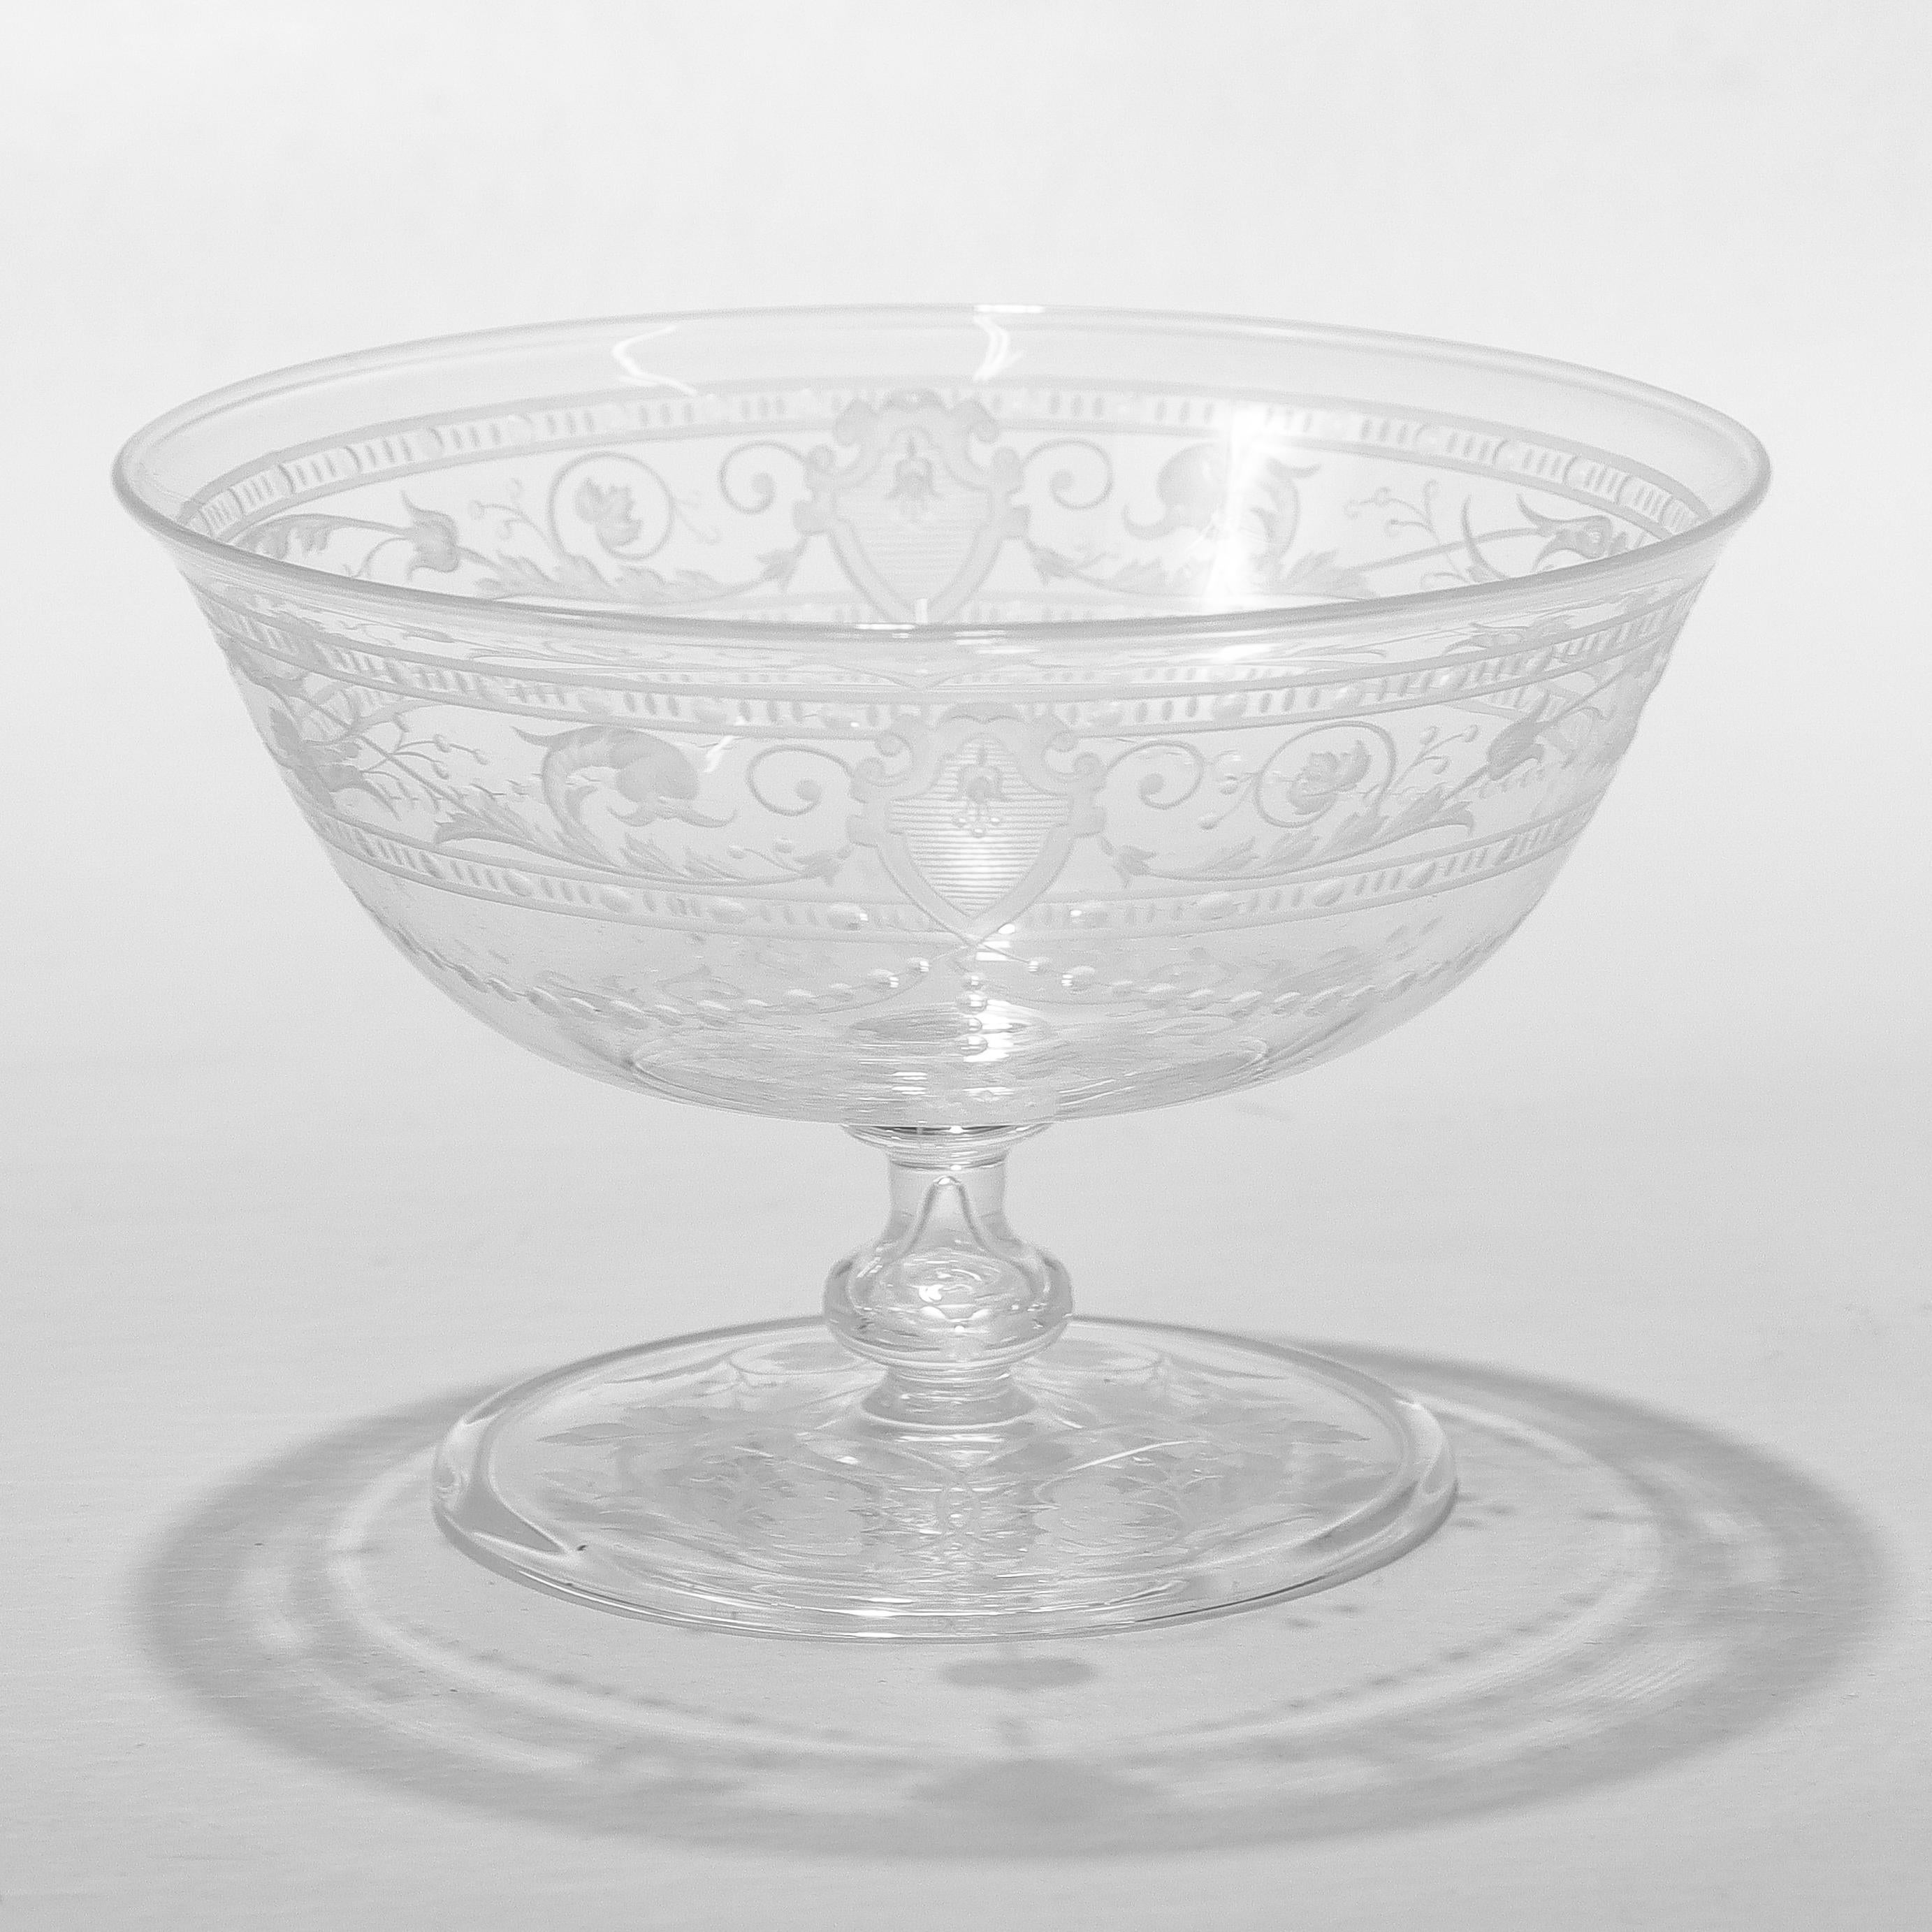 Set of 6 Antique Stourbridge Etched & Engraved Glass Sherbert Bowls For Sale 2